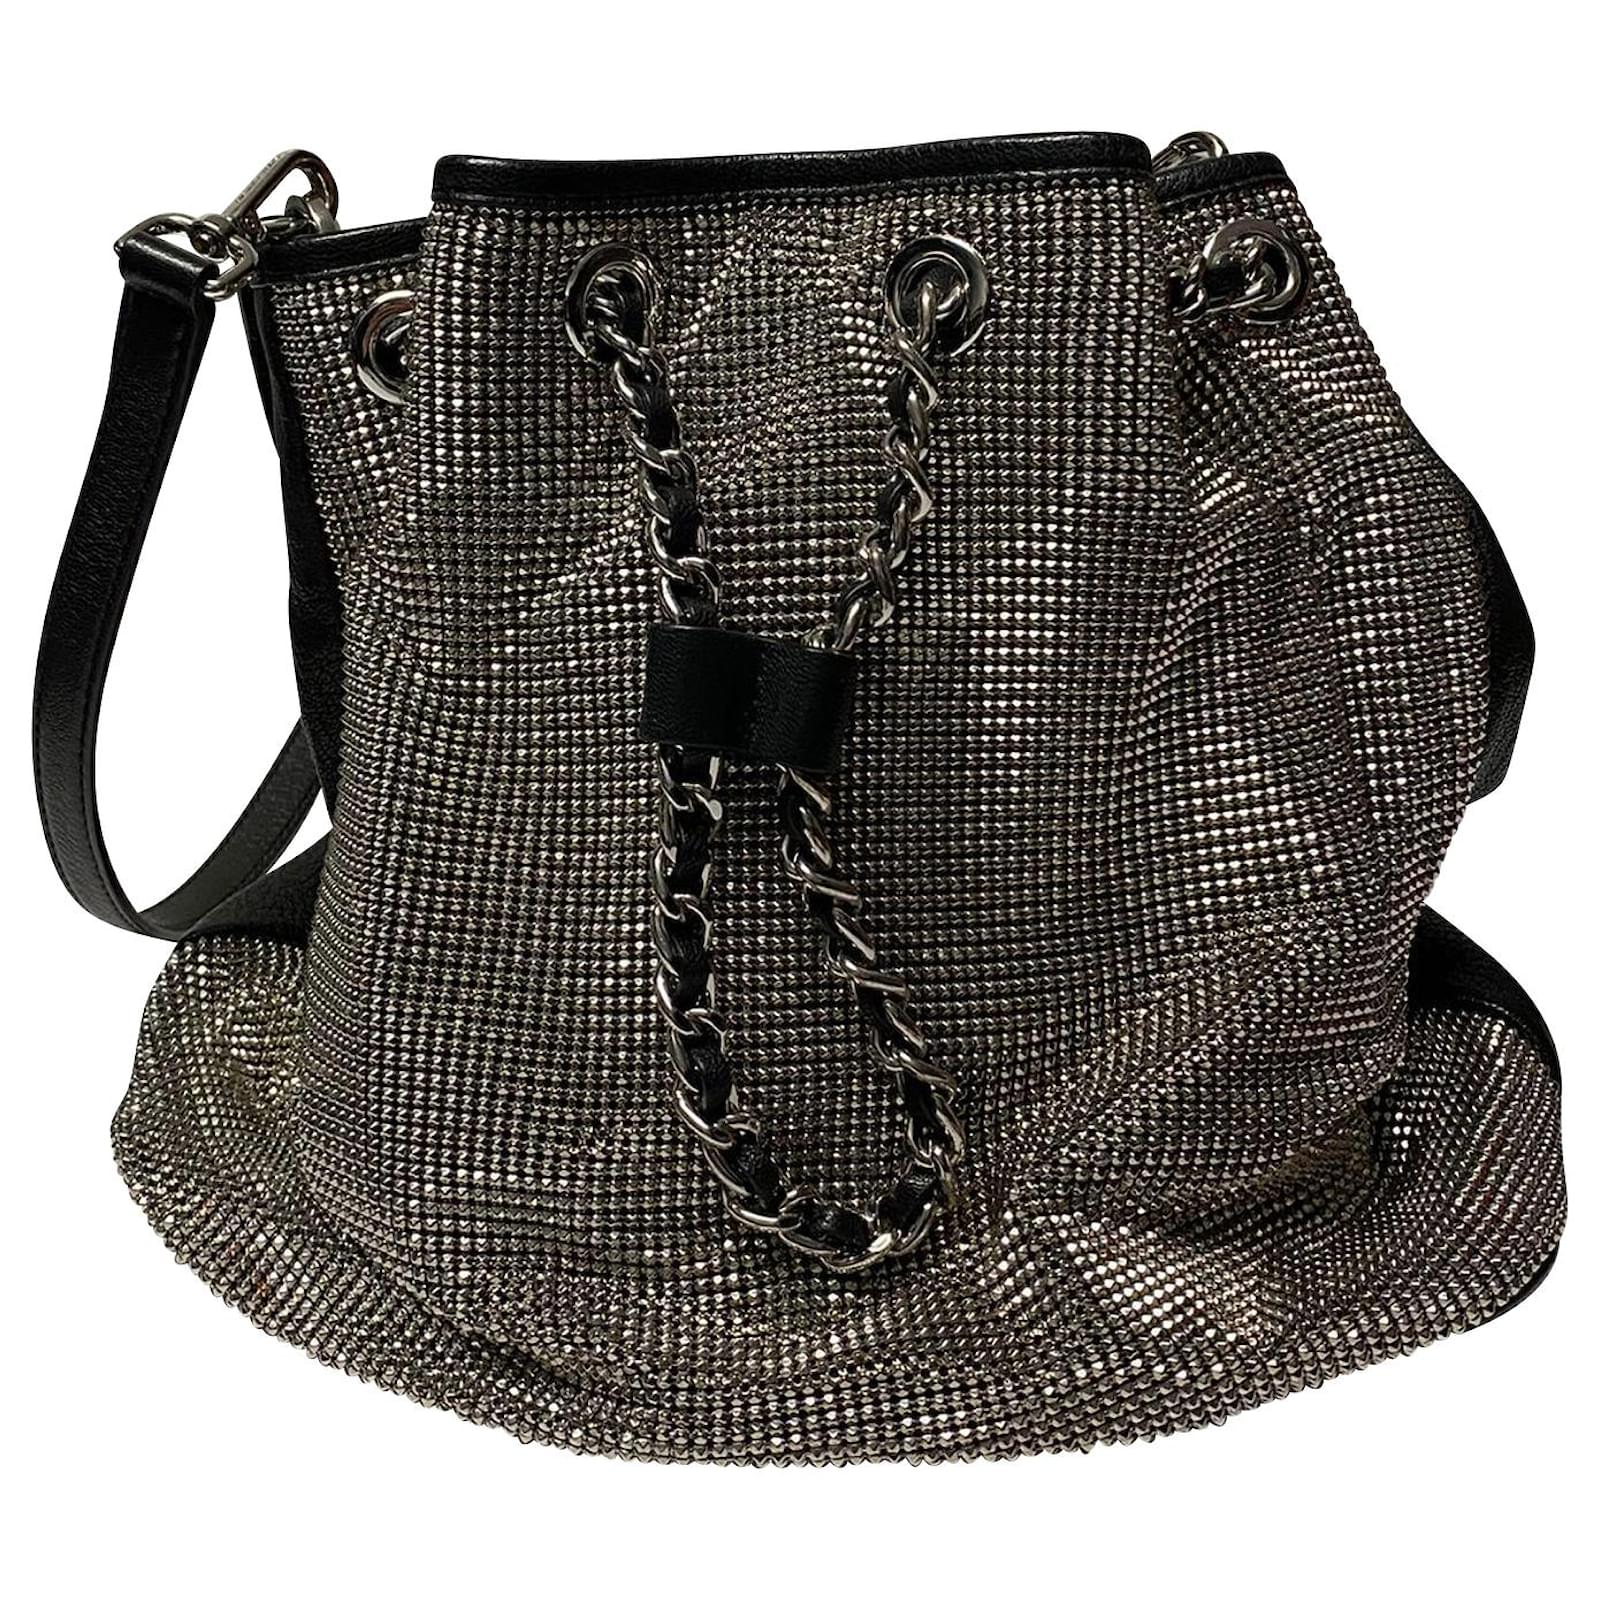 Michael Kors Black Leather Handle Bag